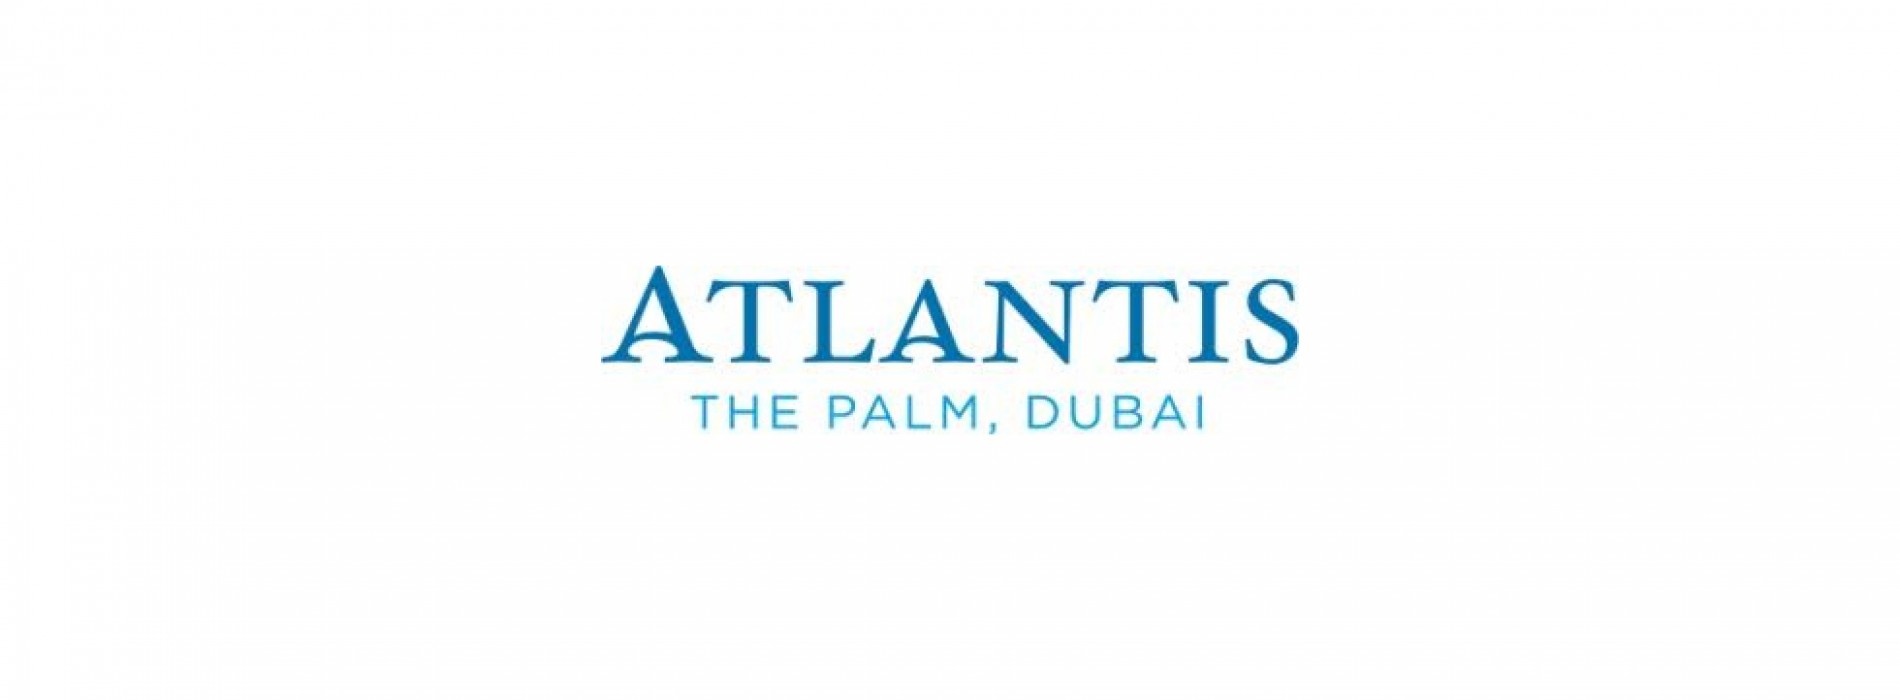 Atlantis, The Palm introduces a Kung Fu Yoga Special contest